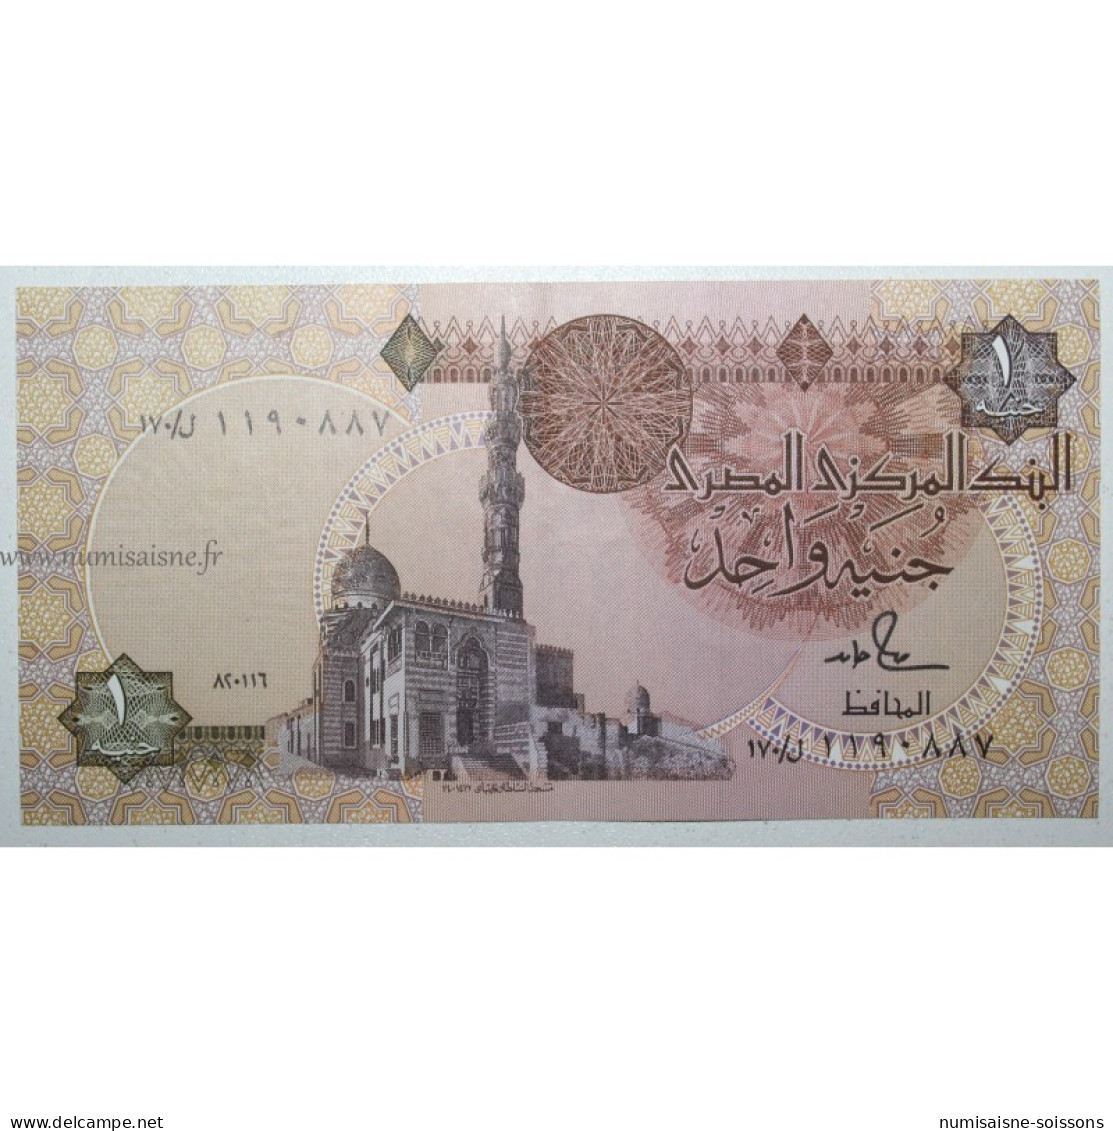 EGYPTE - PICK 50 D - 1 Pound - 1986 - 1992 - Sign 18 - SUP - Egypte